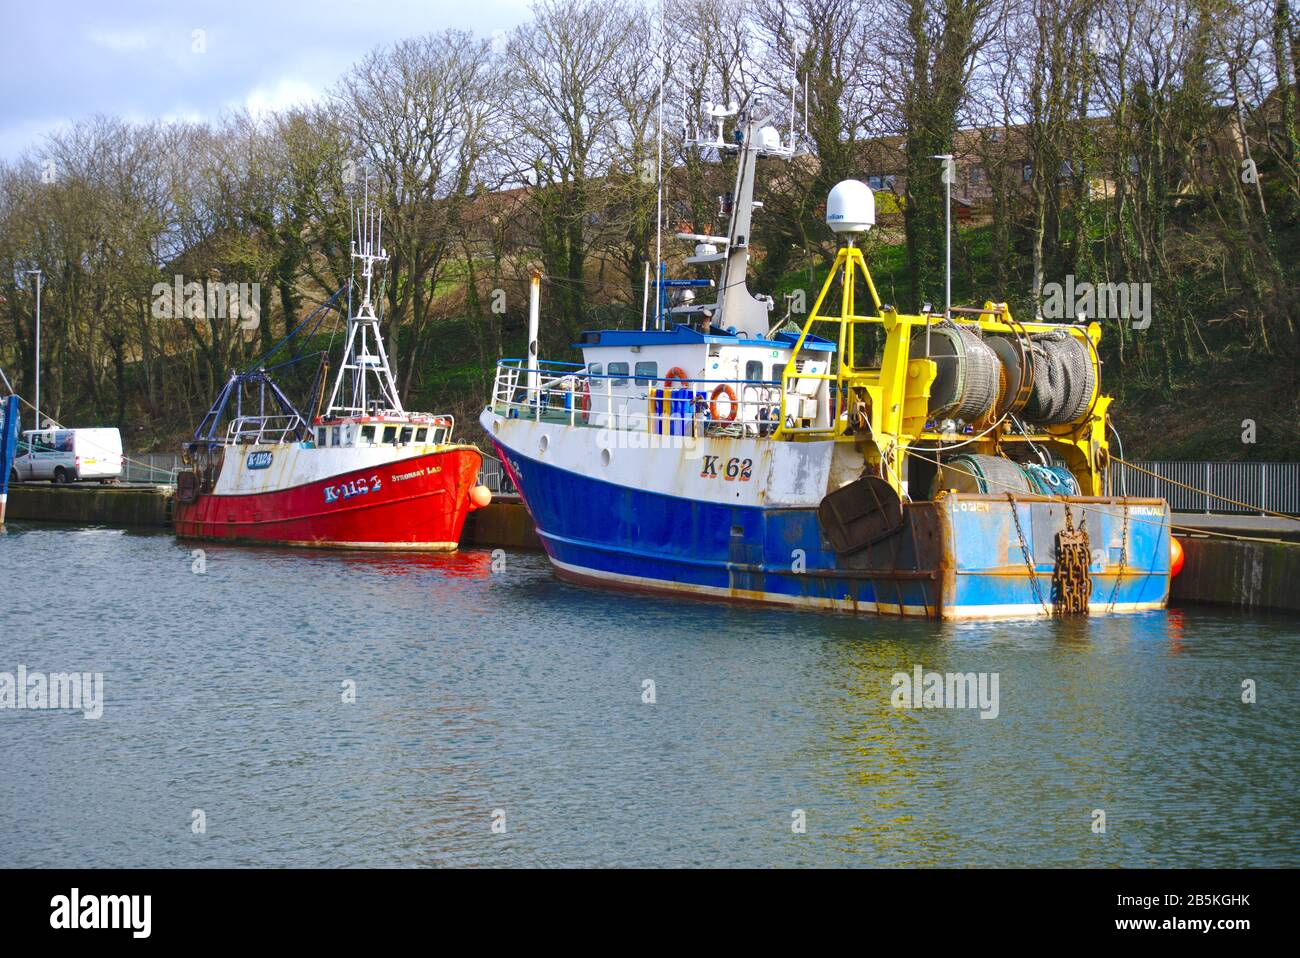 Kirkwall-registered fishing trawlers L'Ogien K62 and Stronsay Lad K1124 in Eyemouth Harbour, Berwickshire, Scottish Border, UK Stock Photo